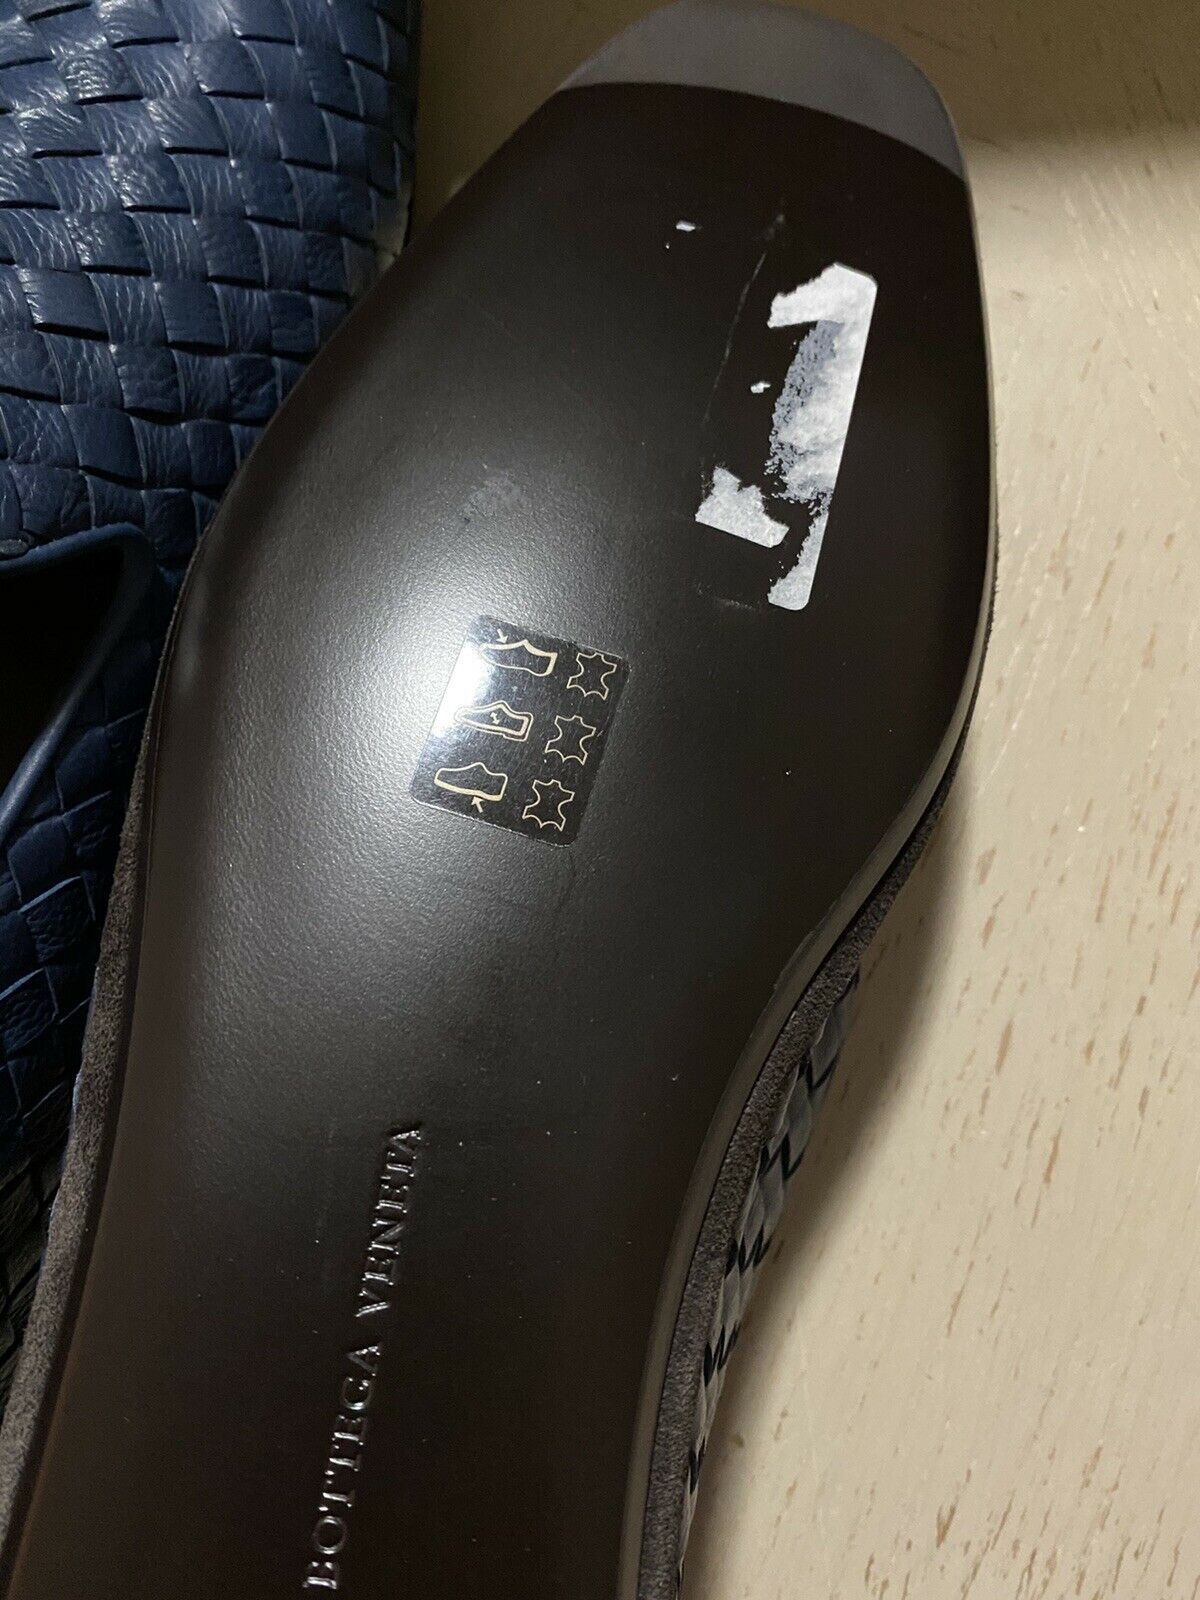 NIB $810 Bottega Veneta Men Leather Loafers Shoes Blue 11.5 US/44.5 Eu